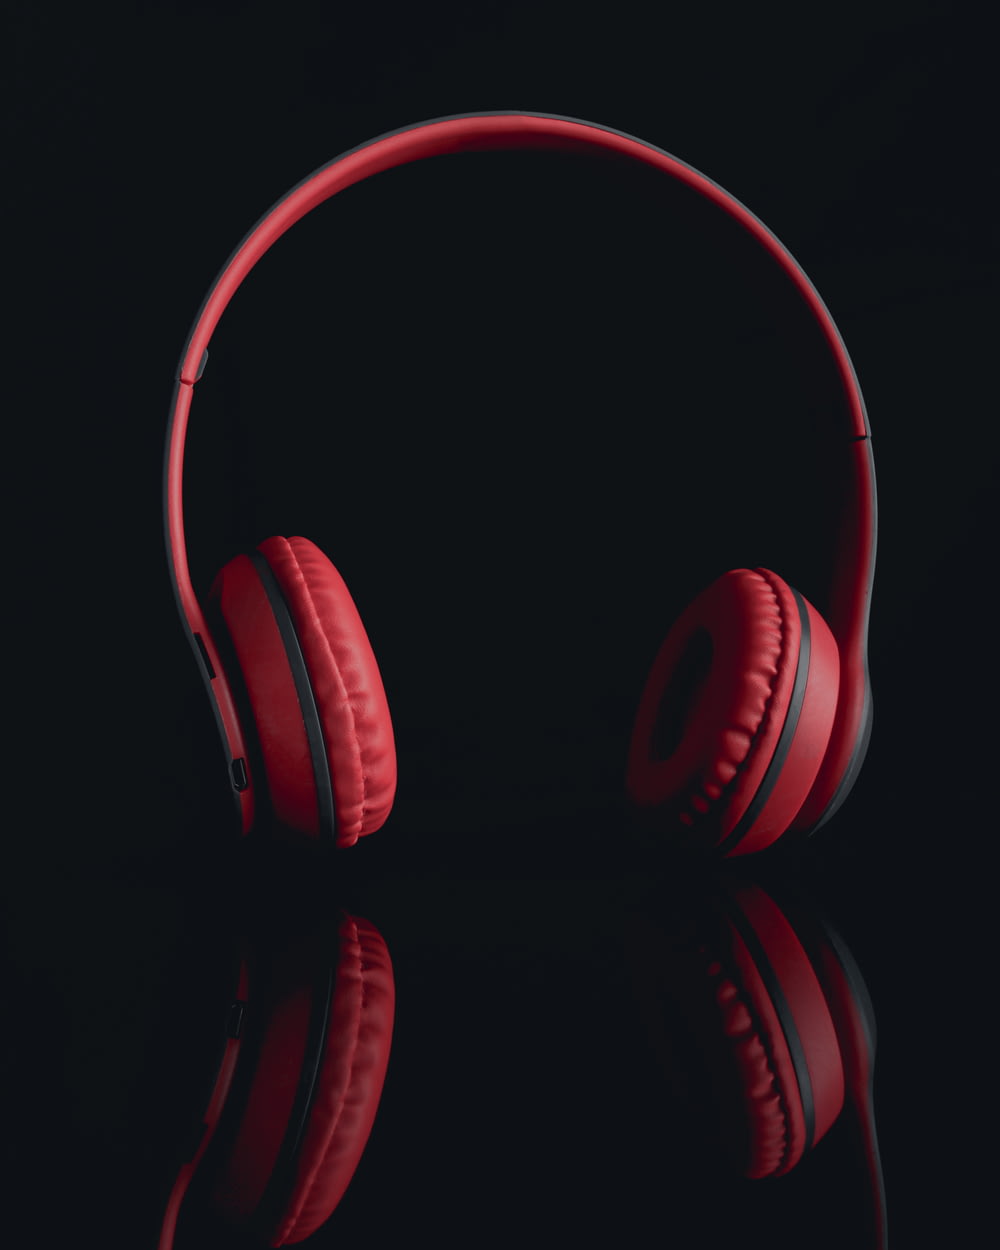 a pair of red headphones